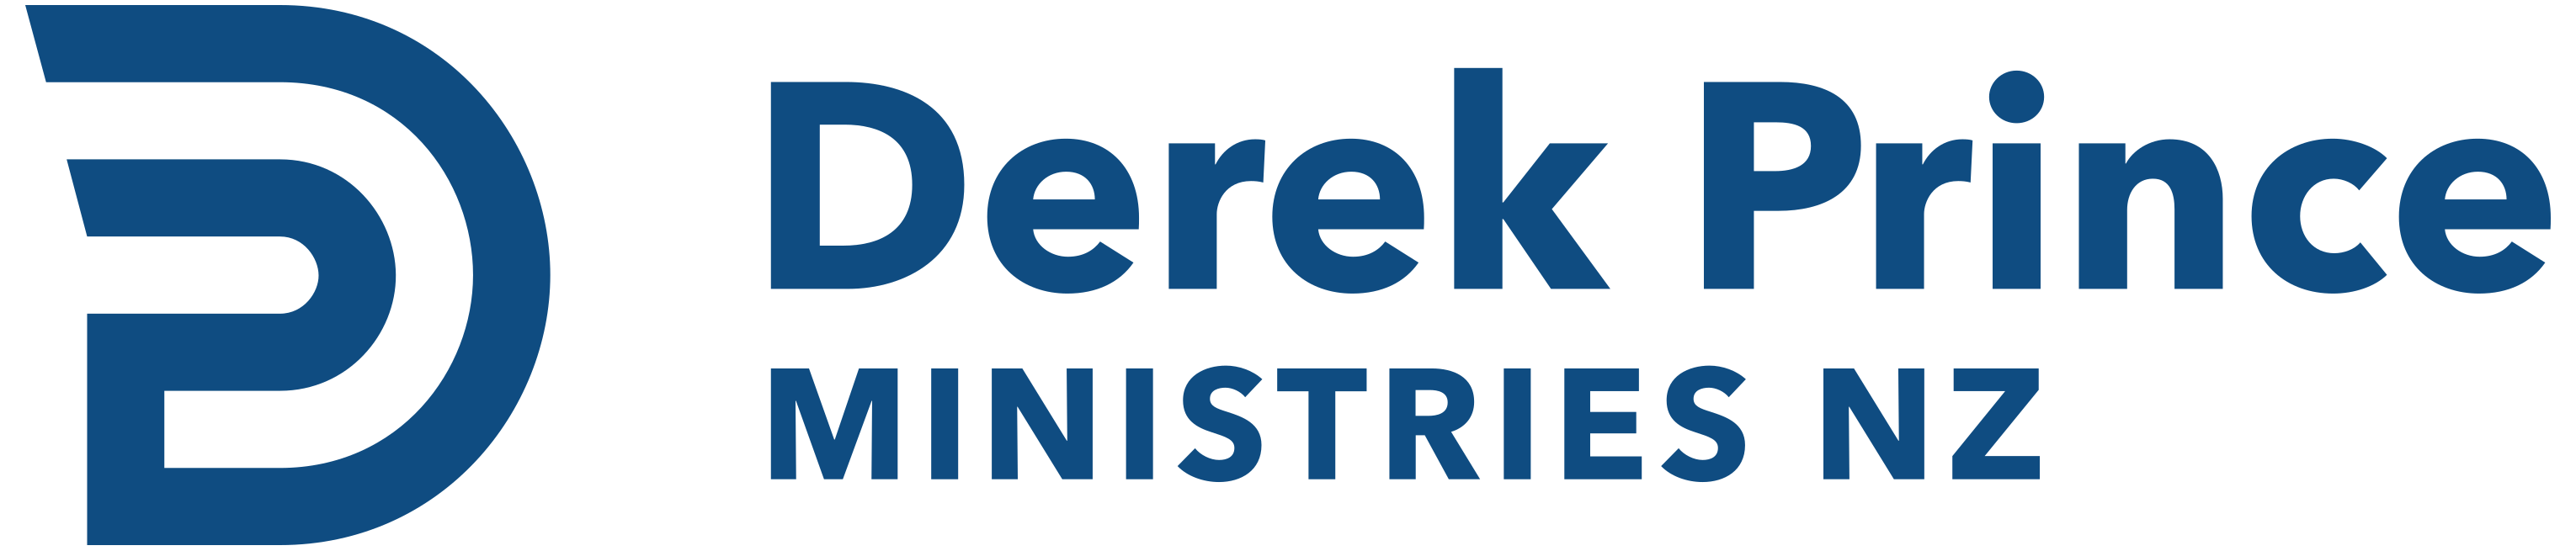 Derek Prince Ministries - New Zealand logo